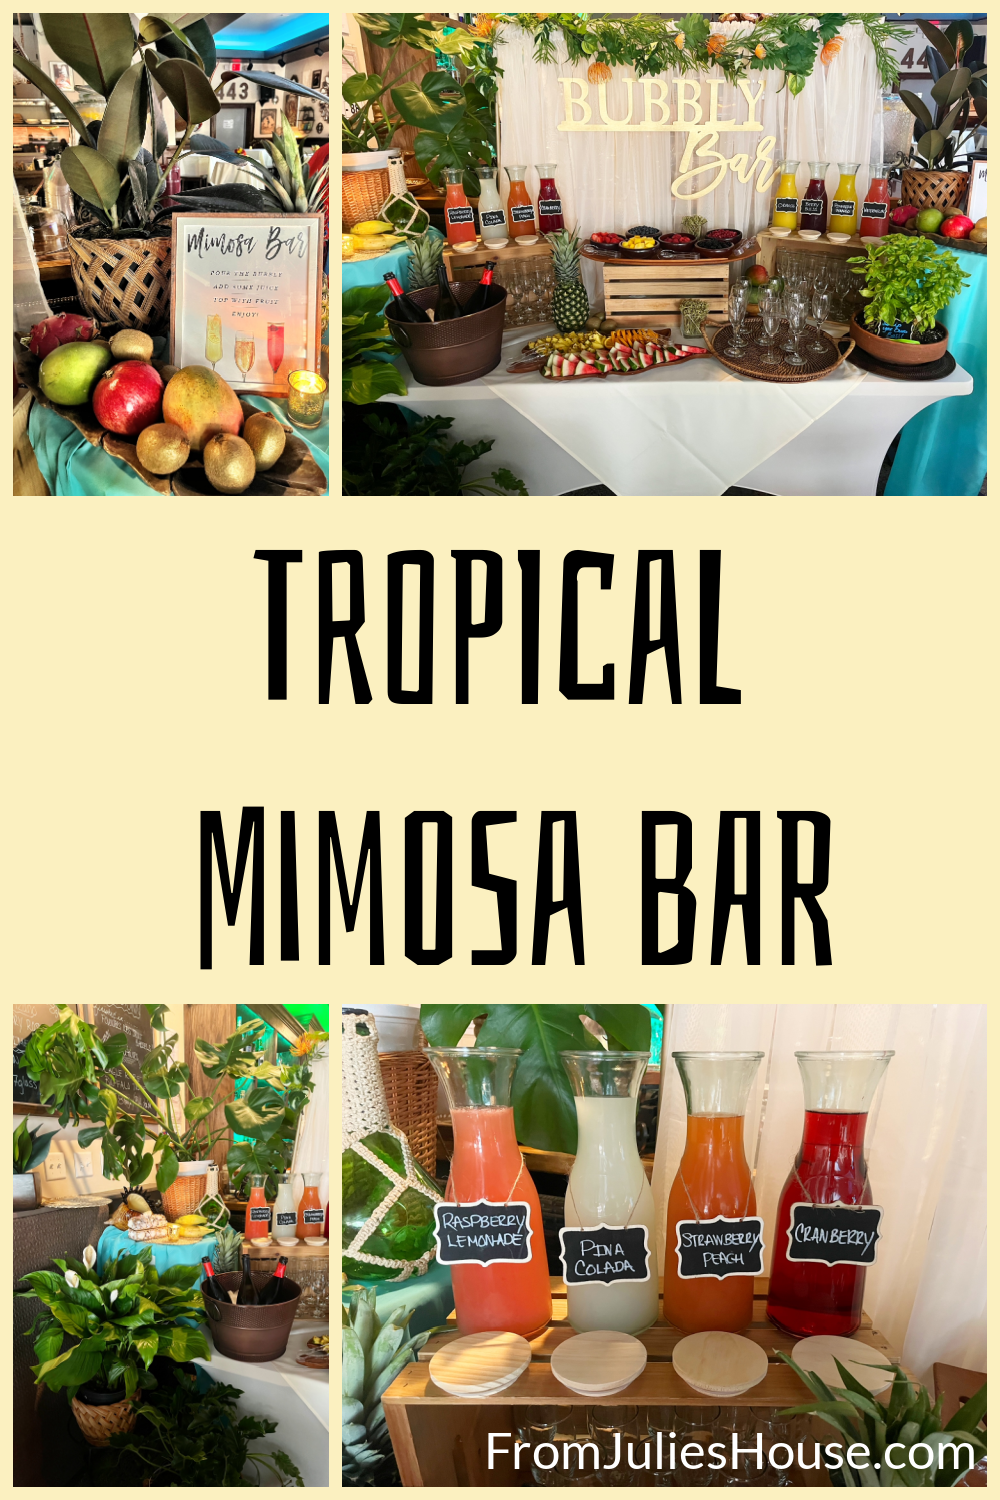 http://fromjulieshouse.com/wp-content/uploads/2022/08/443-social-club-tropical-mimosa-bar-Pinterest.png